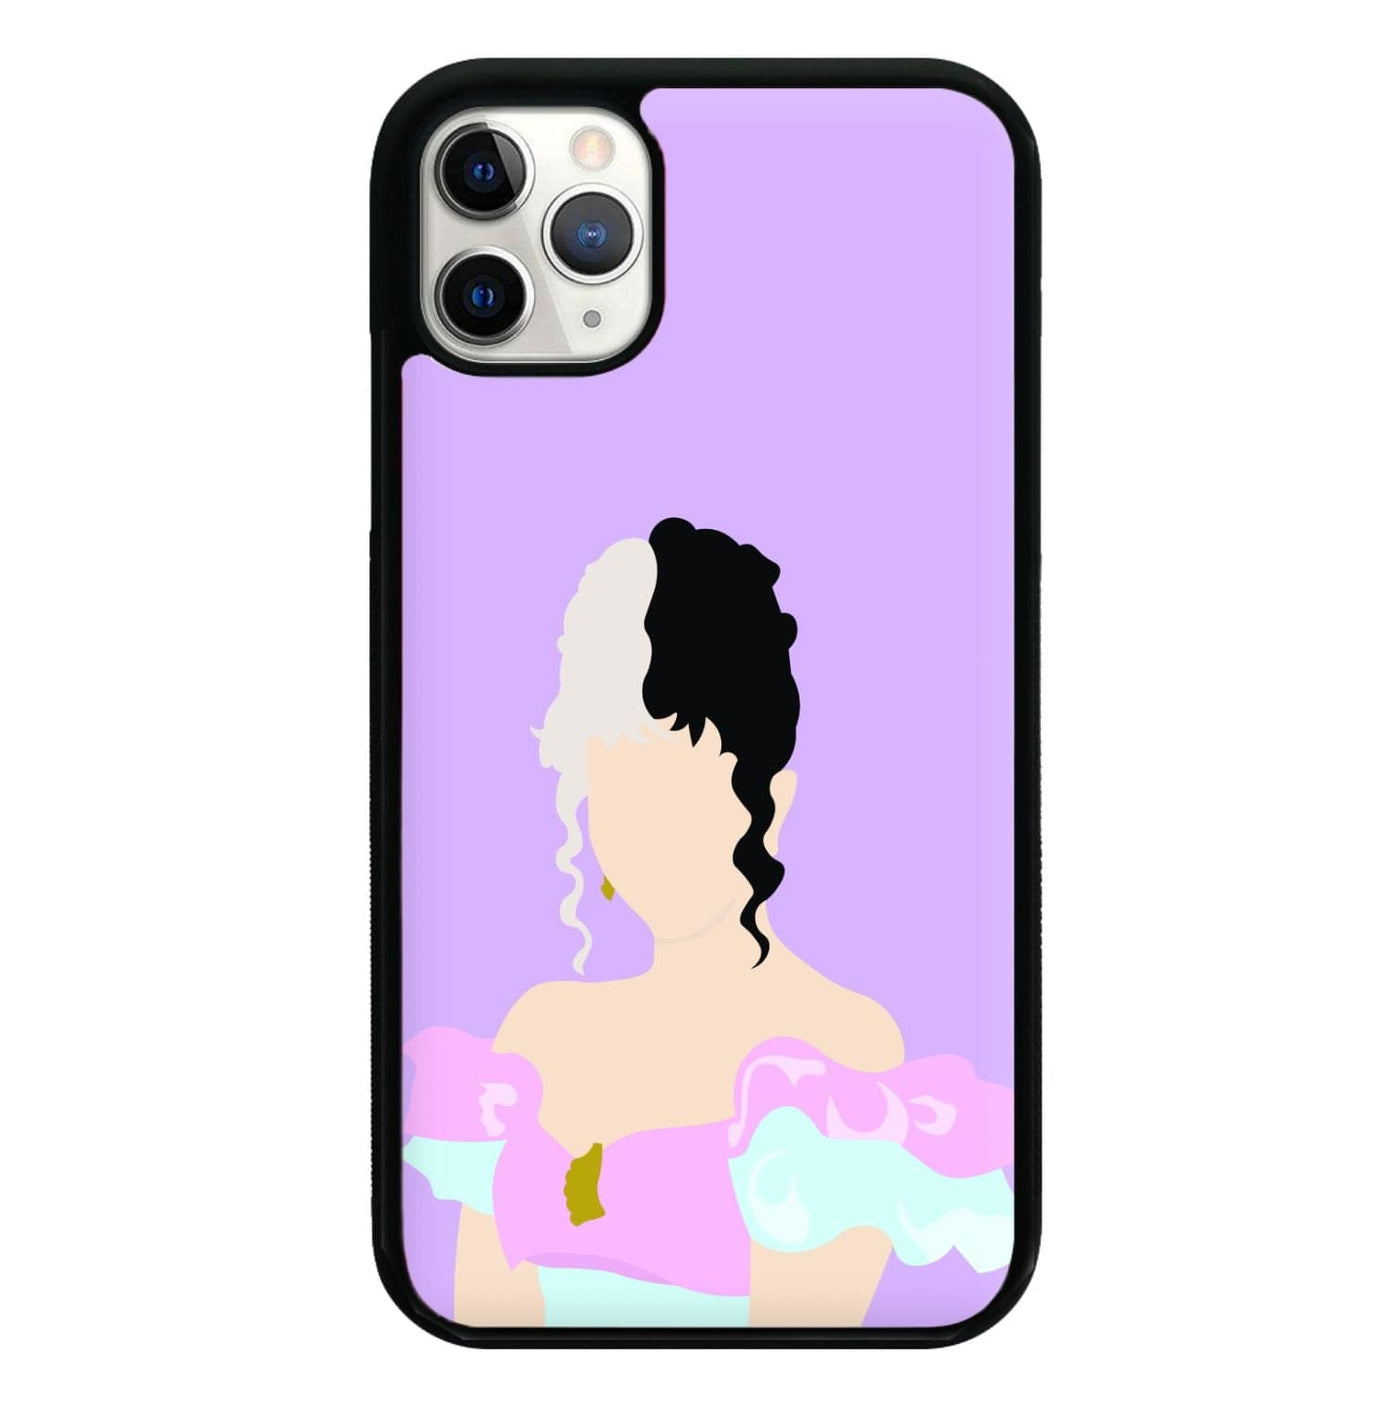 Blue And Pink Dress - Melanie Martinez Phone Case